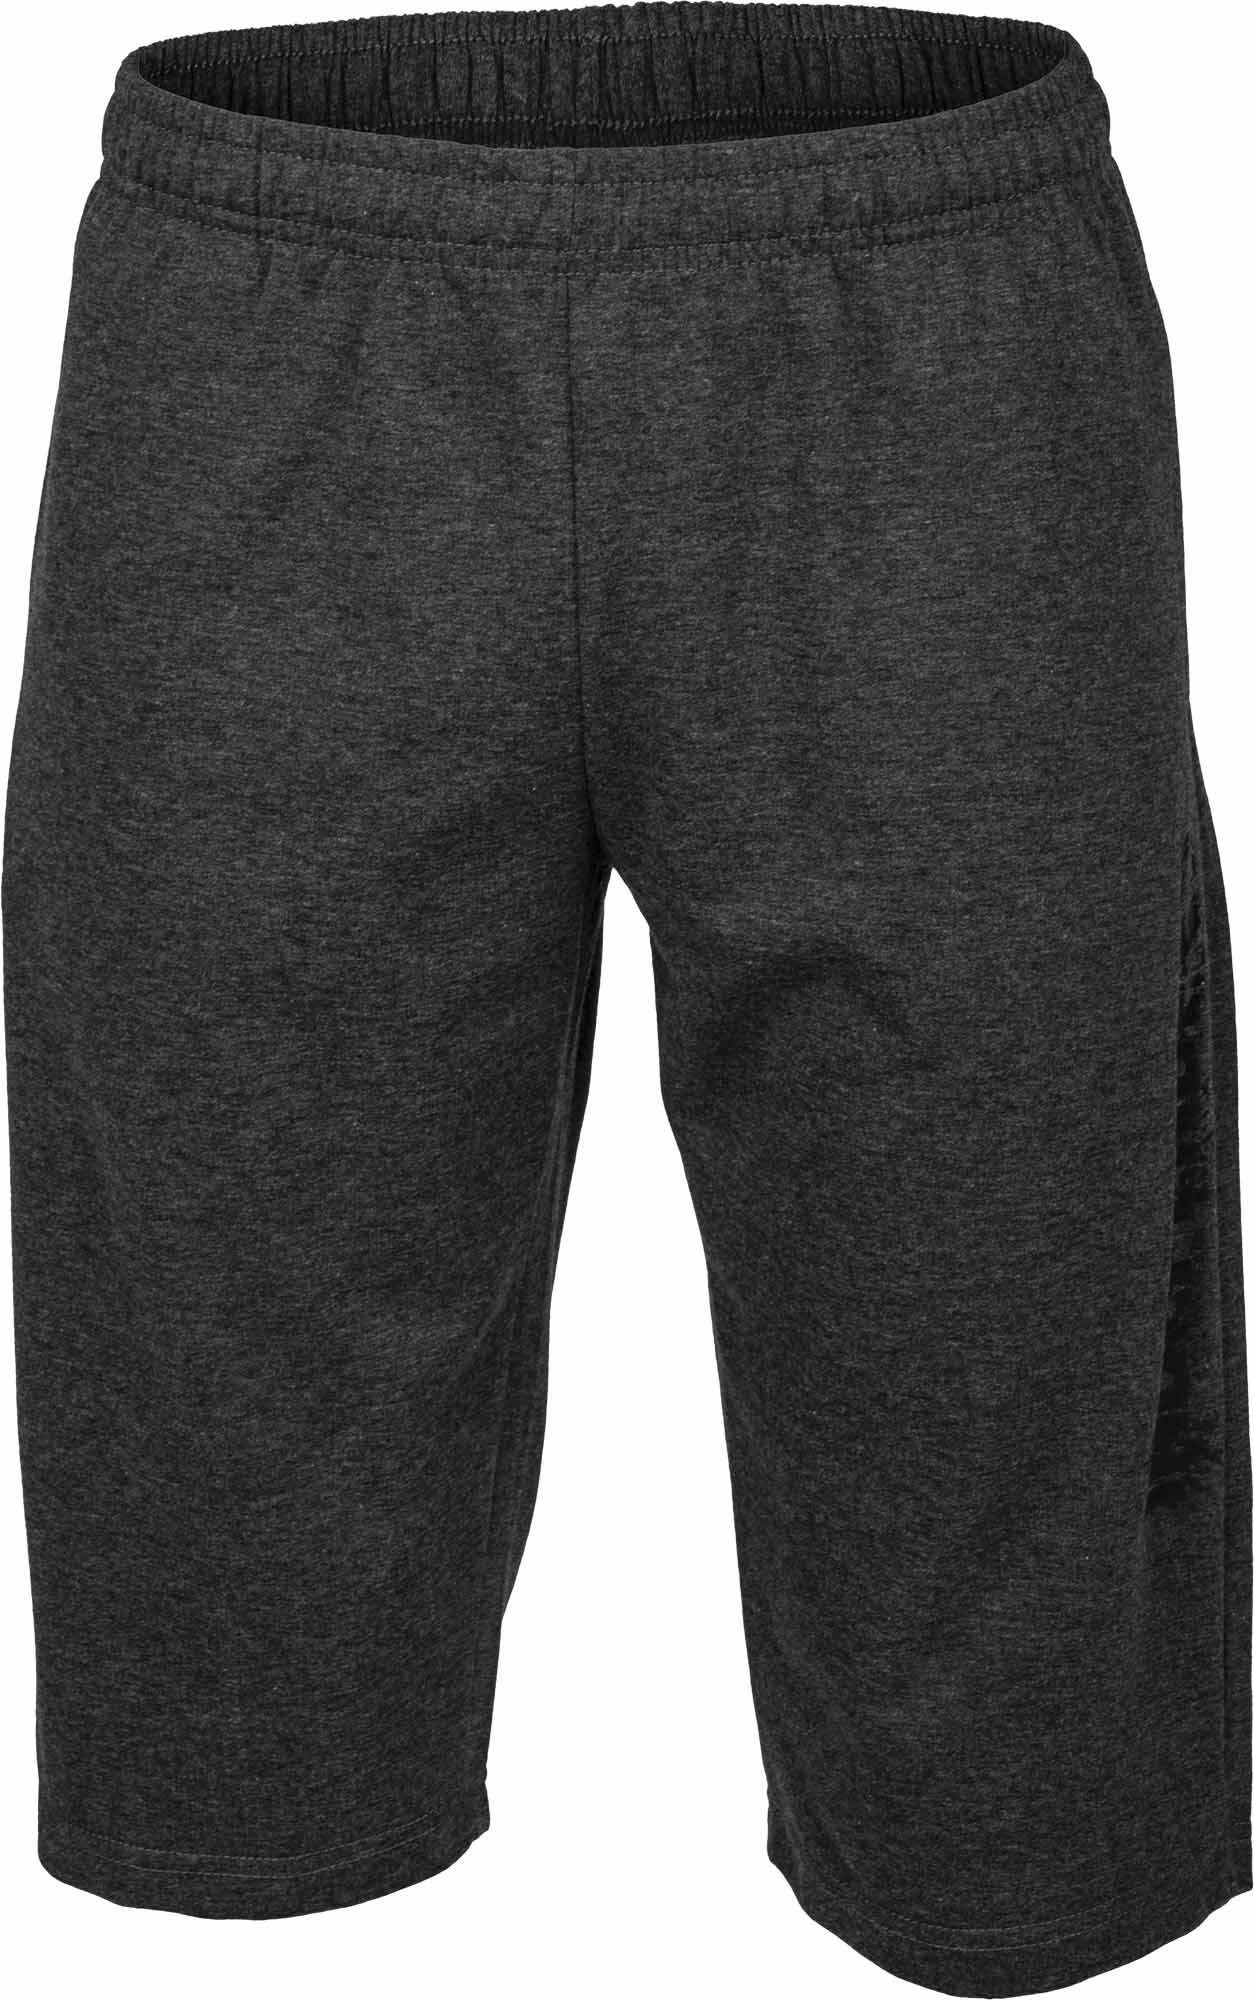 Men’s 3/4 length sweatpants